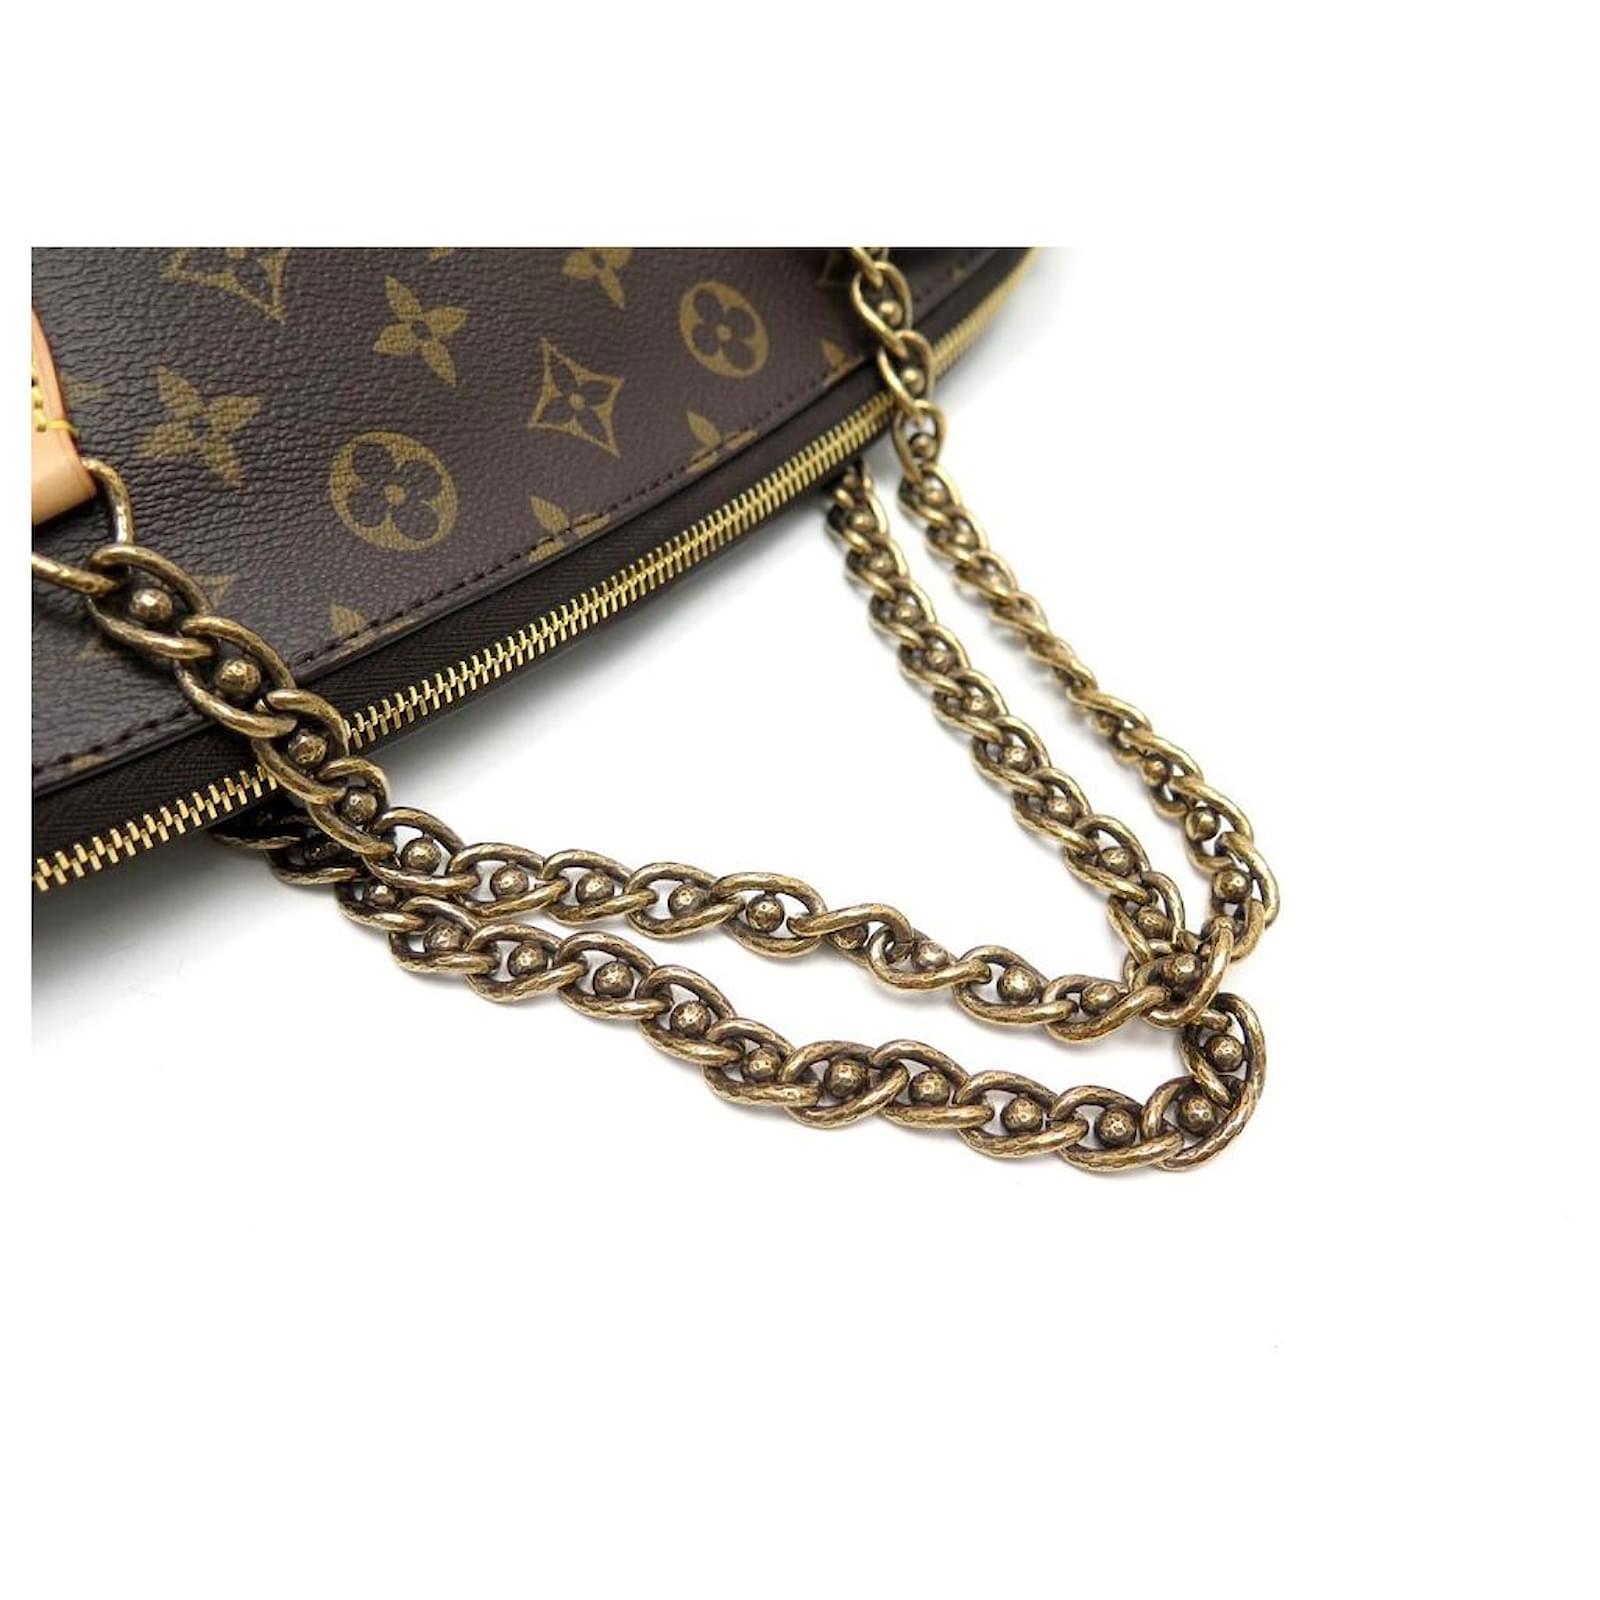 Authentic Louis Vuitton Automne Hiver 2013-2014 Monogram Zip Top